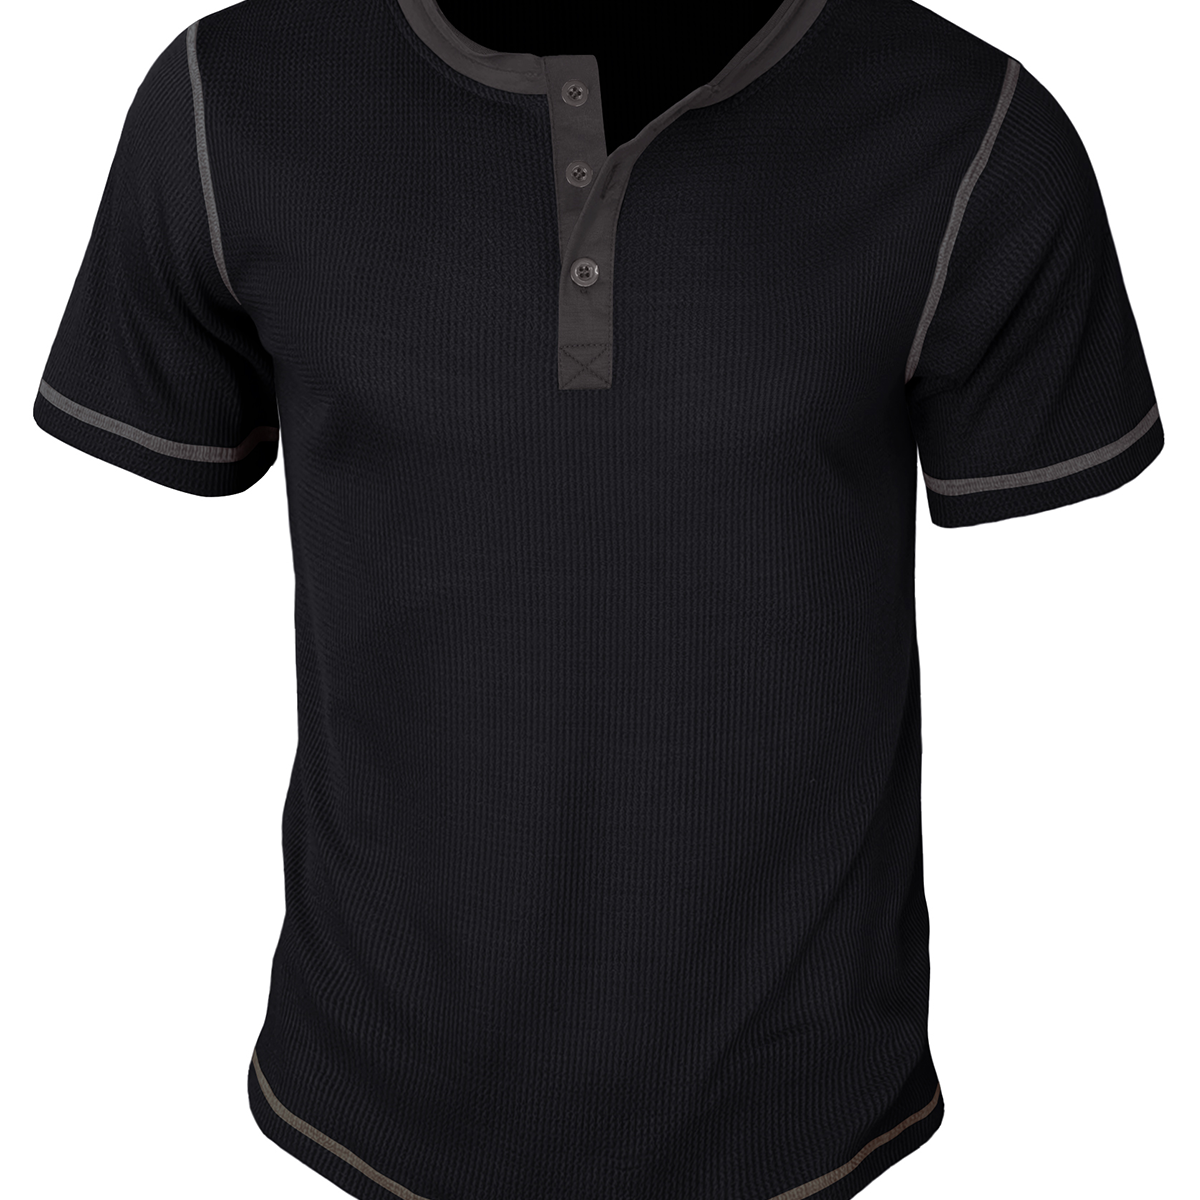 Men's Vintage Solid Color Henley Collar Casual Short Sleeve T-Shirt